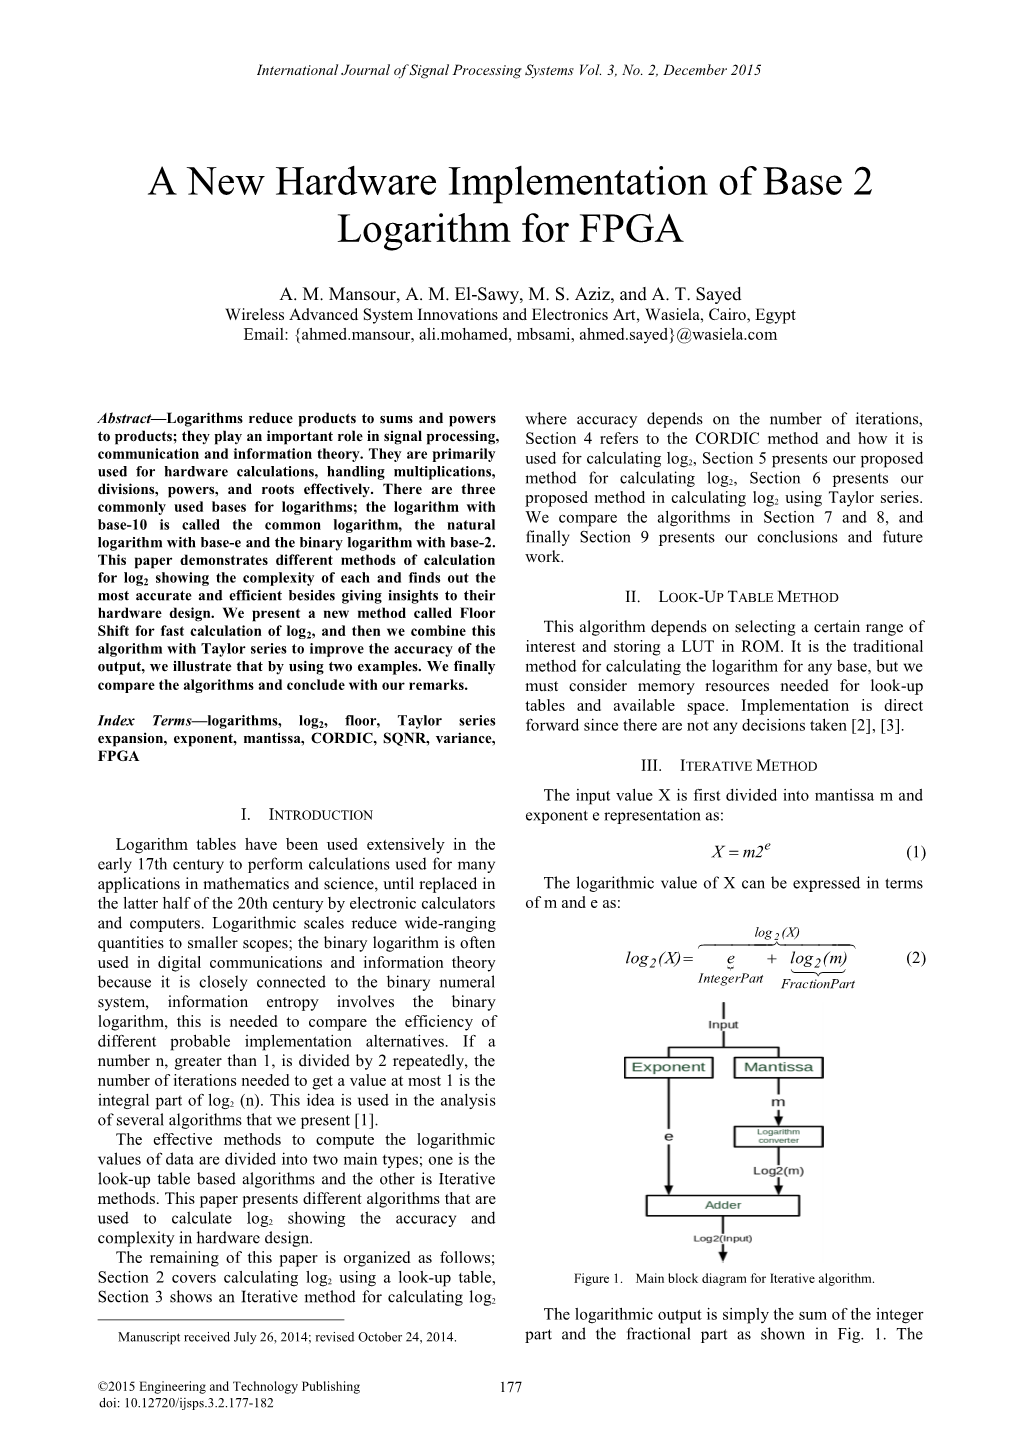 A New Hardware Implementation of Base 2 Logarithm for FPGA